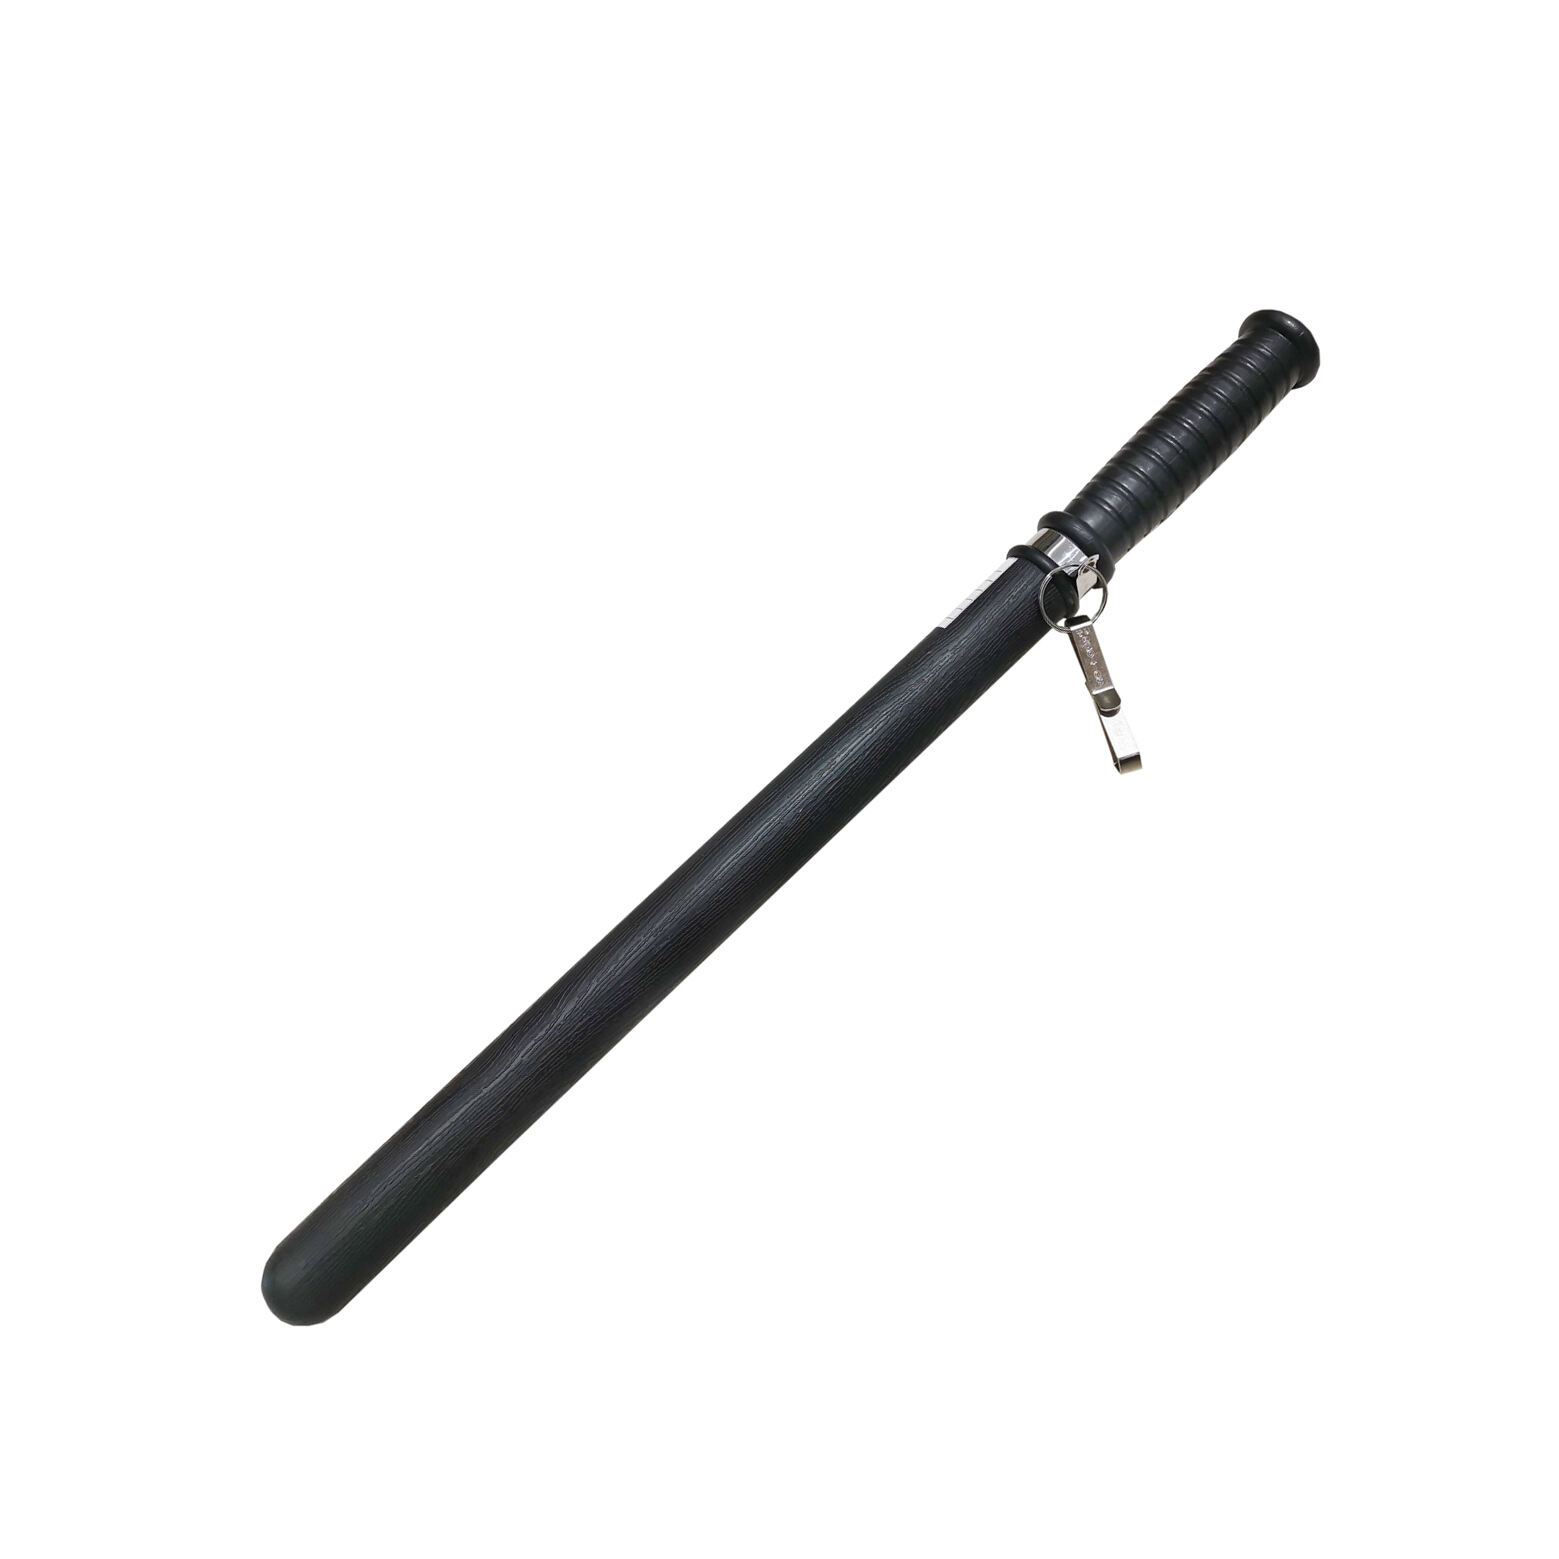 Plastic baton 50cm short straight police baton supplier